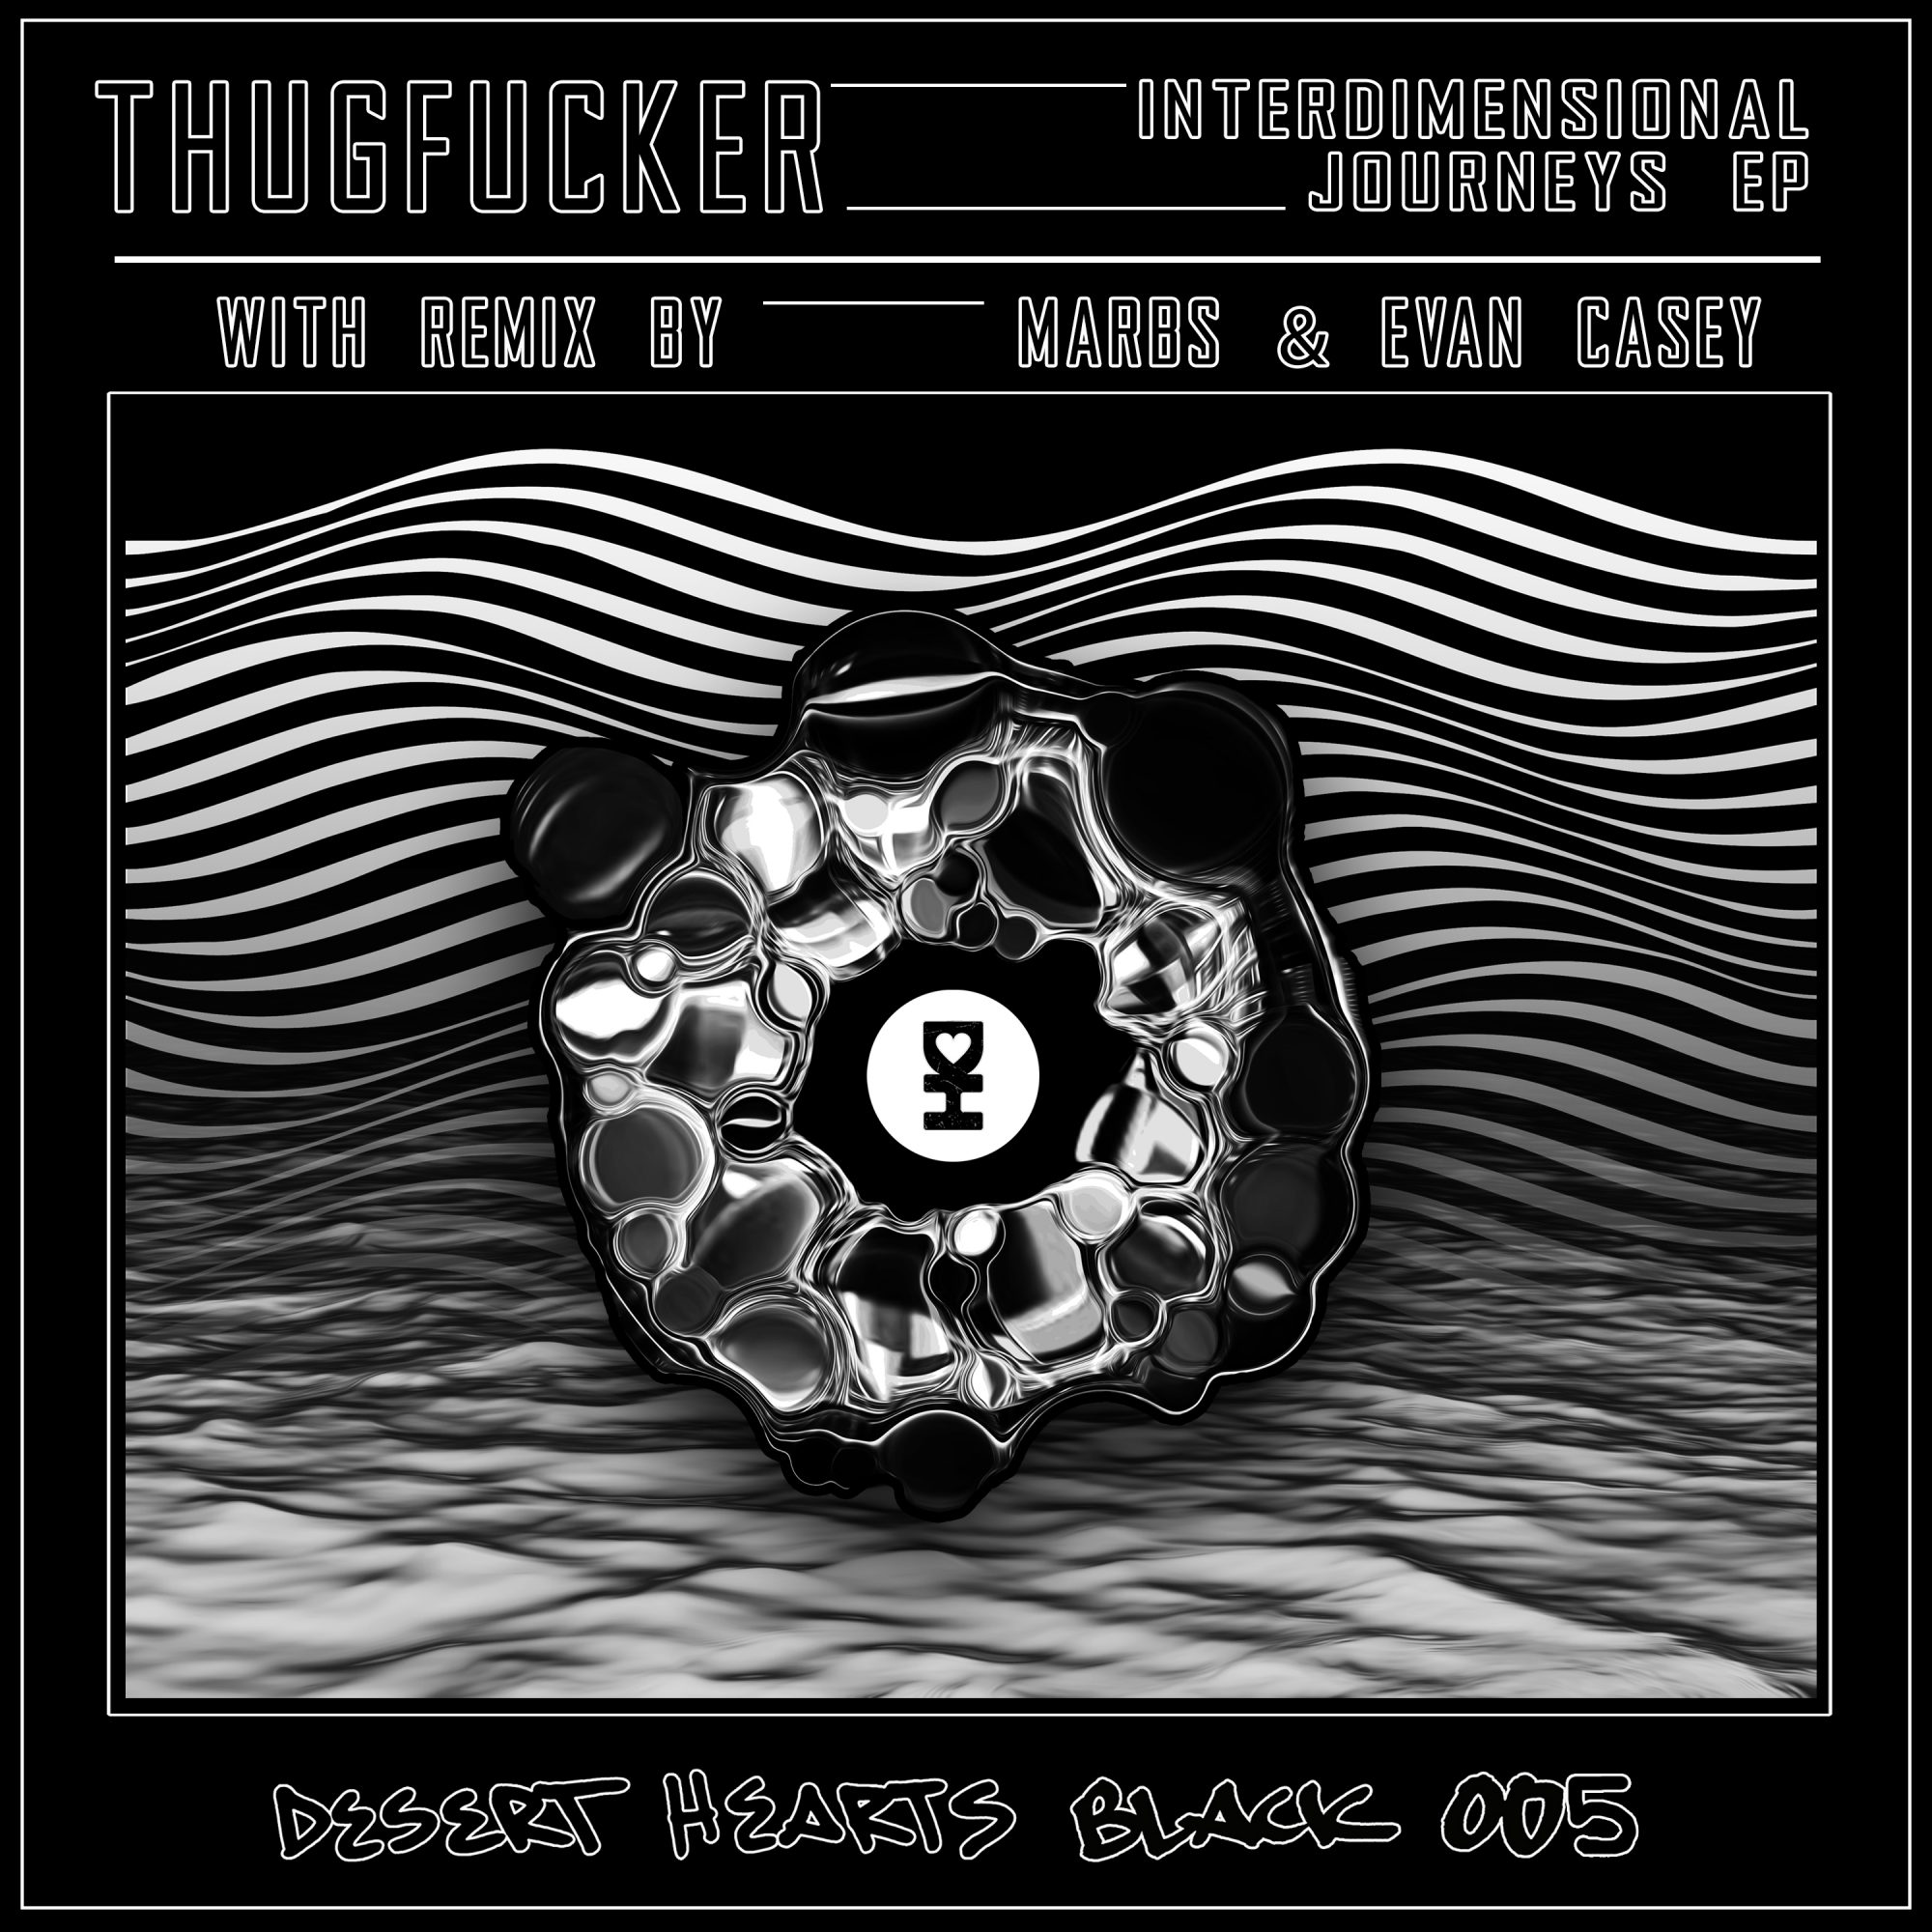 Thugfucker - Interdimensional Journeys EP